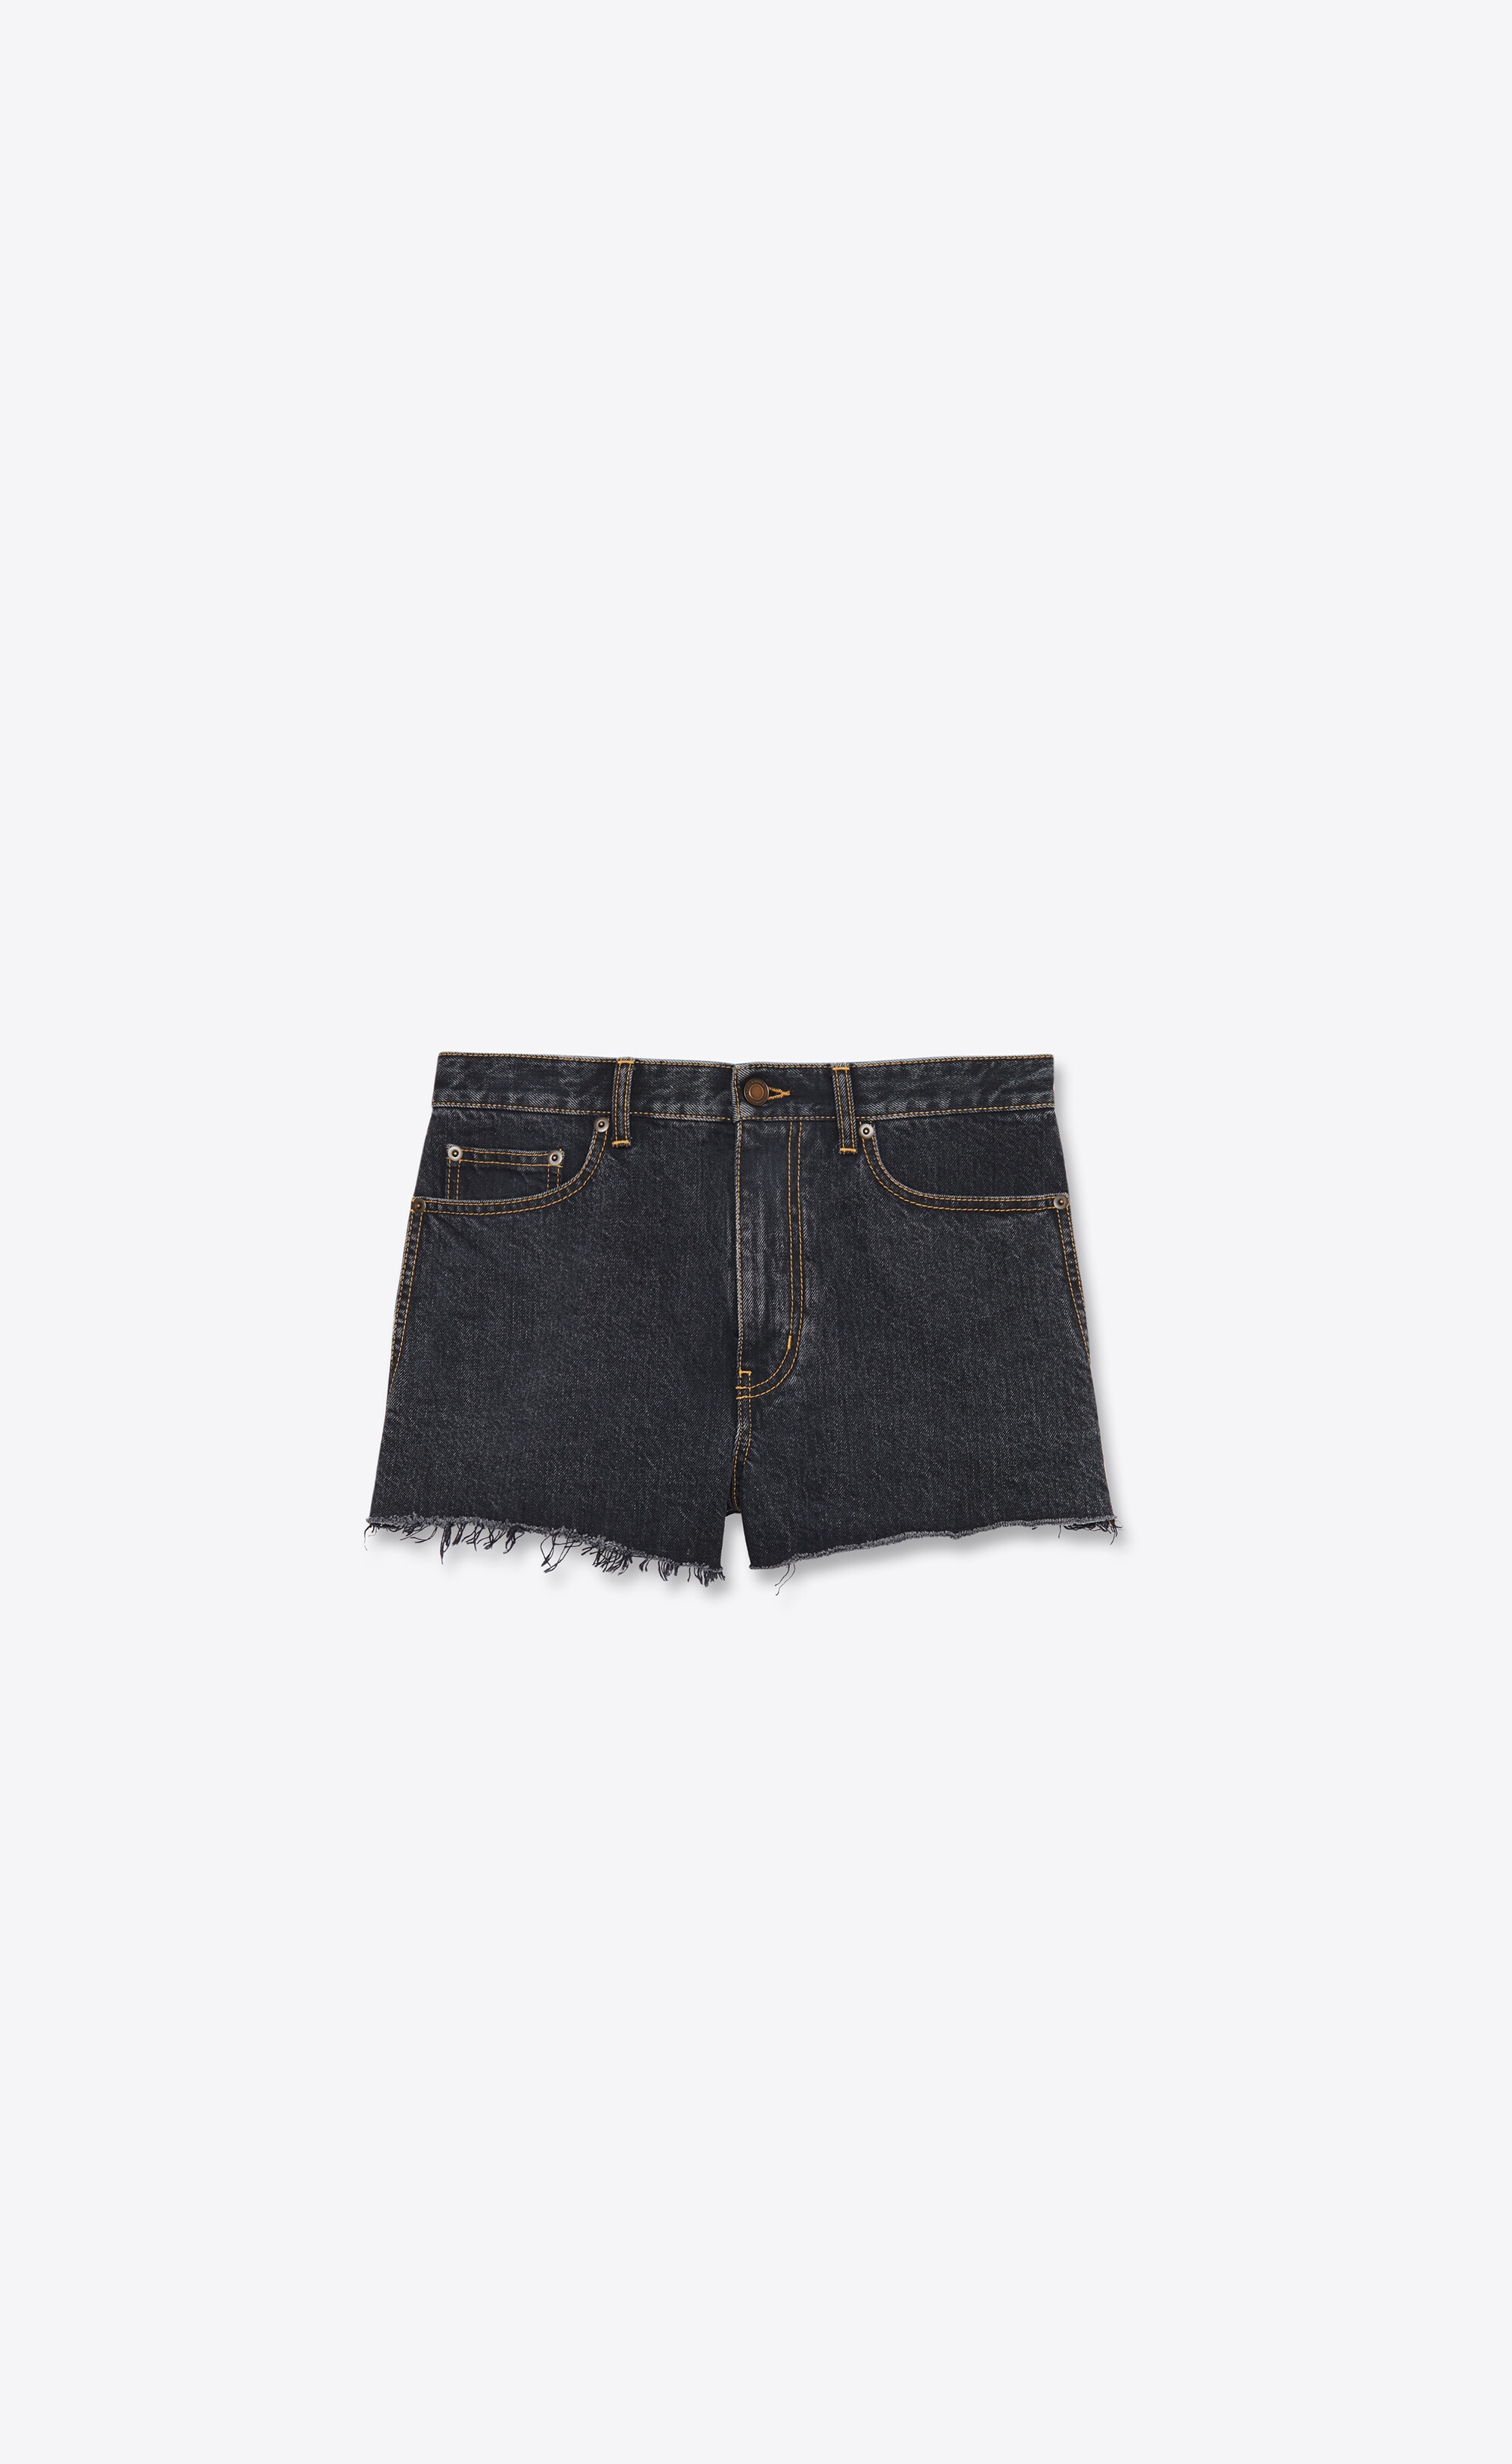 baggy shorts in charcoal grey denim - 1